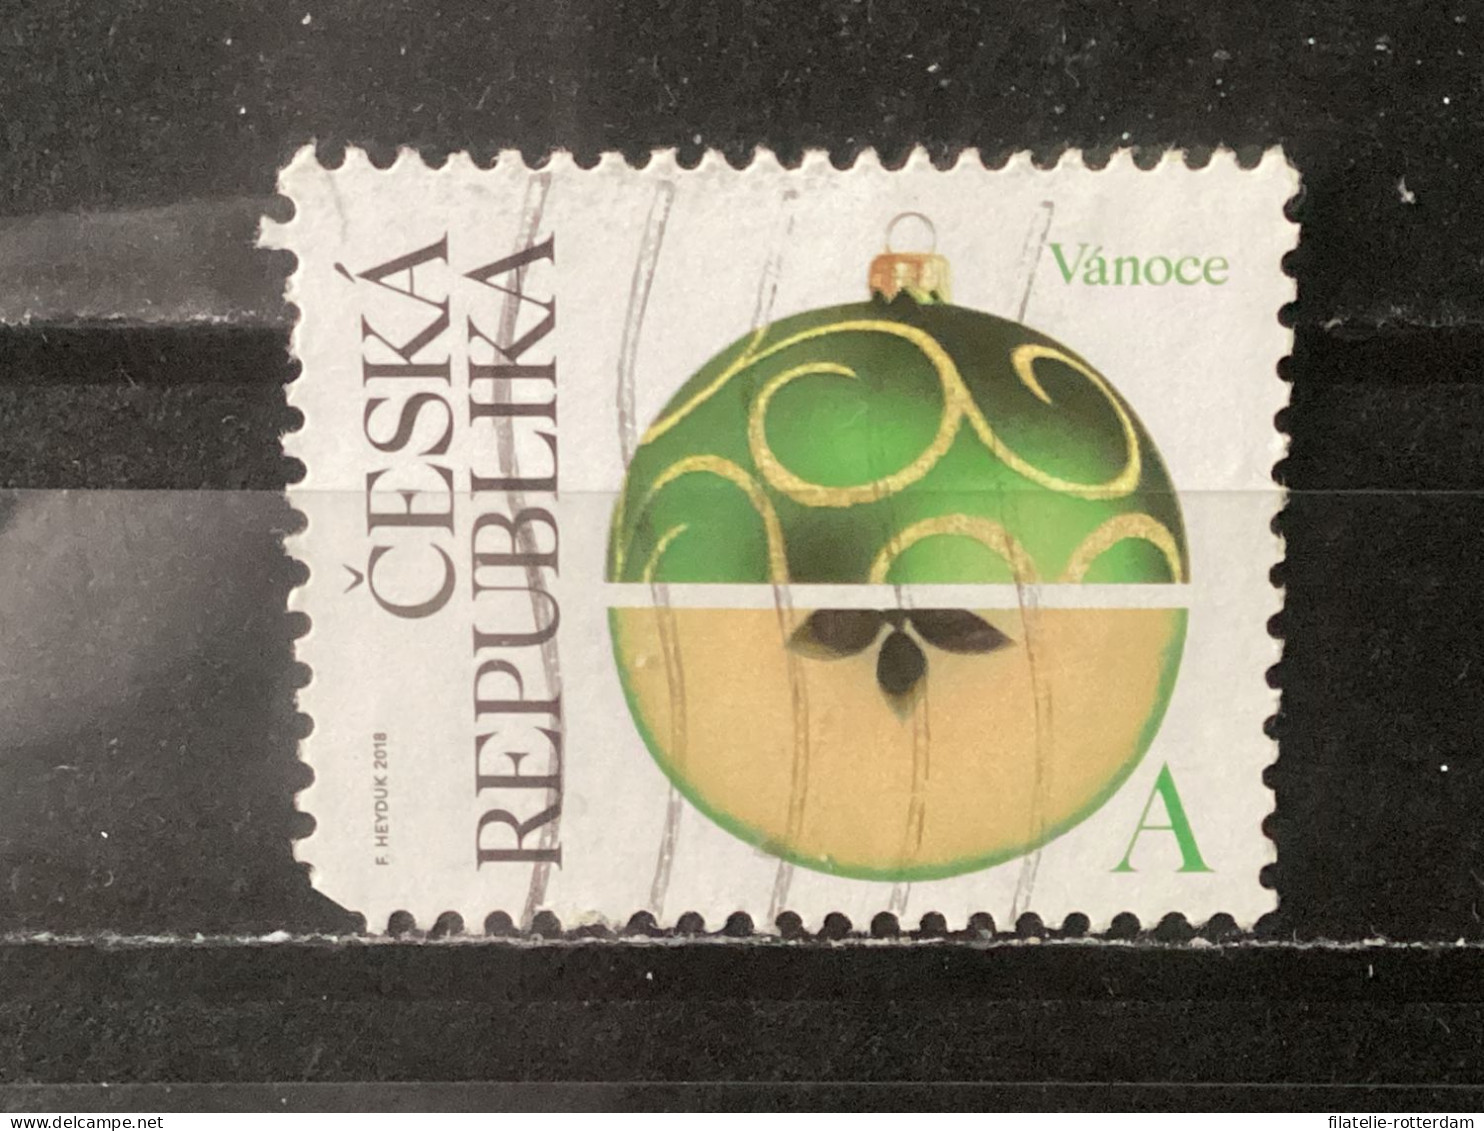 Czech Republic / Tsjechië - Christmas (A) 2018 - Used Stamps